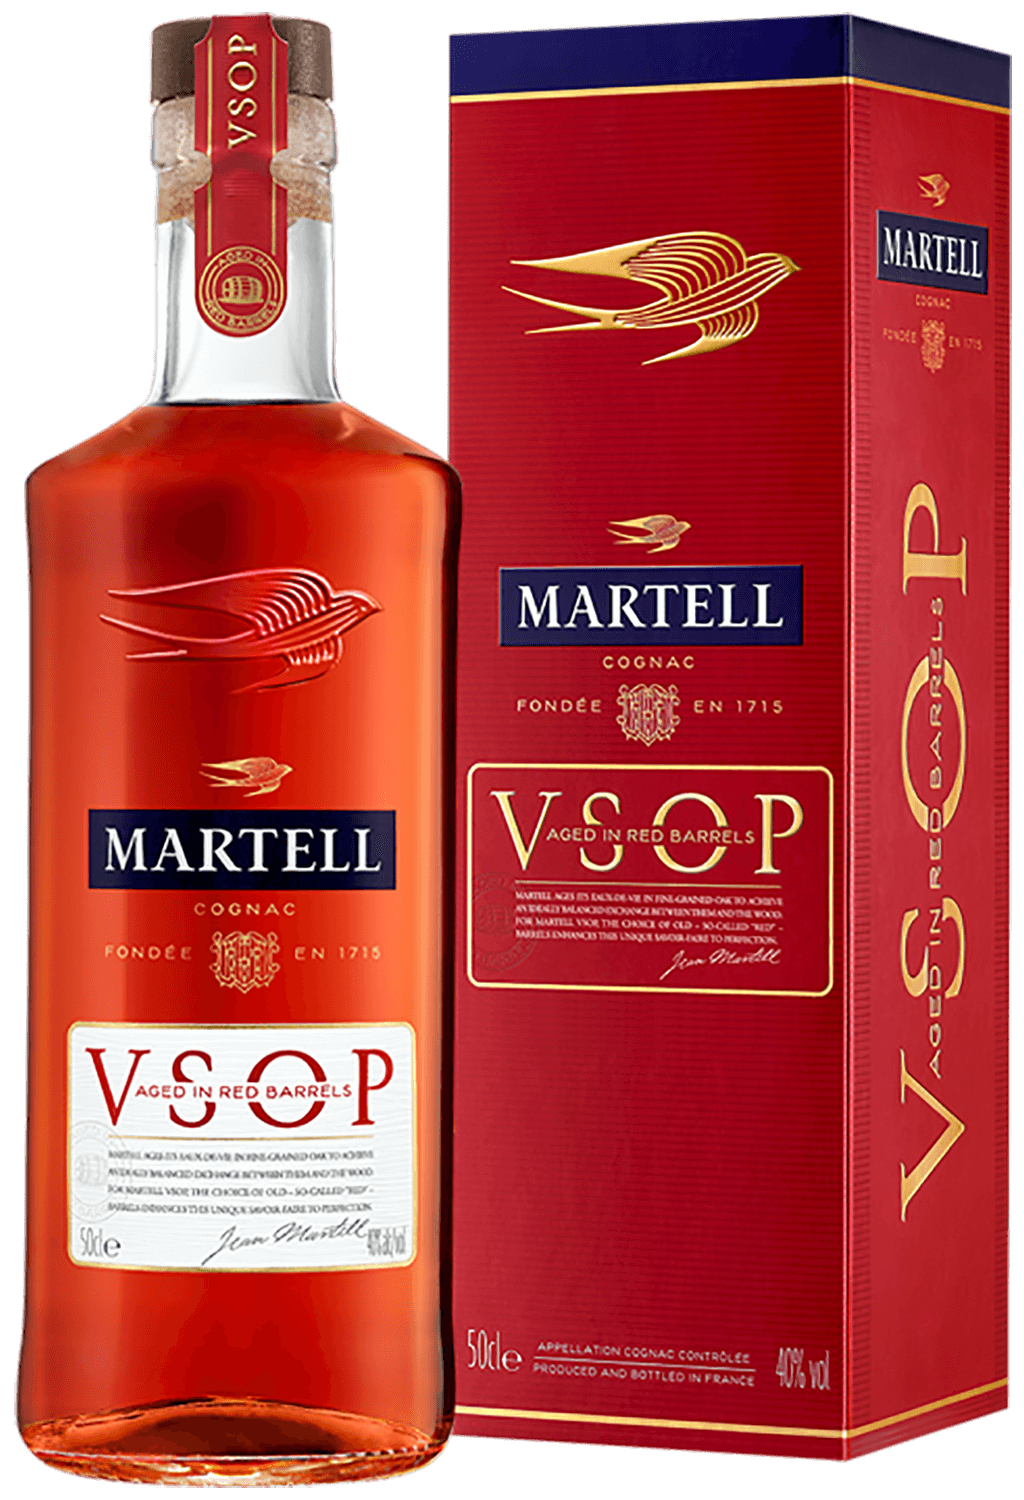 Martell VSOP Aged in Red Barrels (gift box) martell vsop gift box